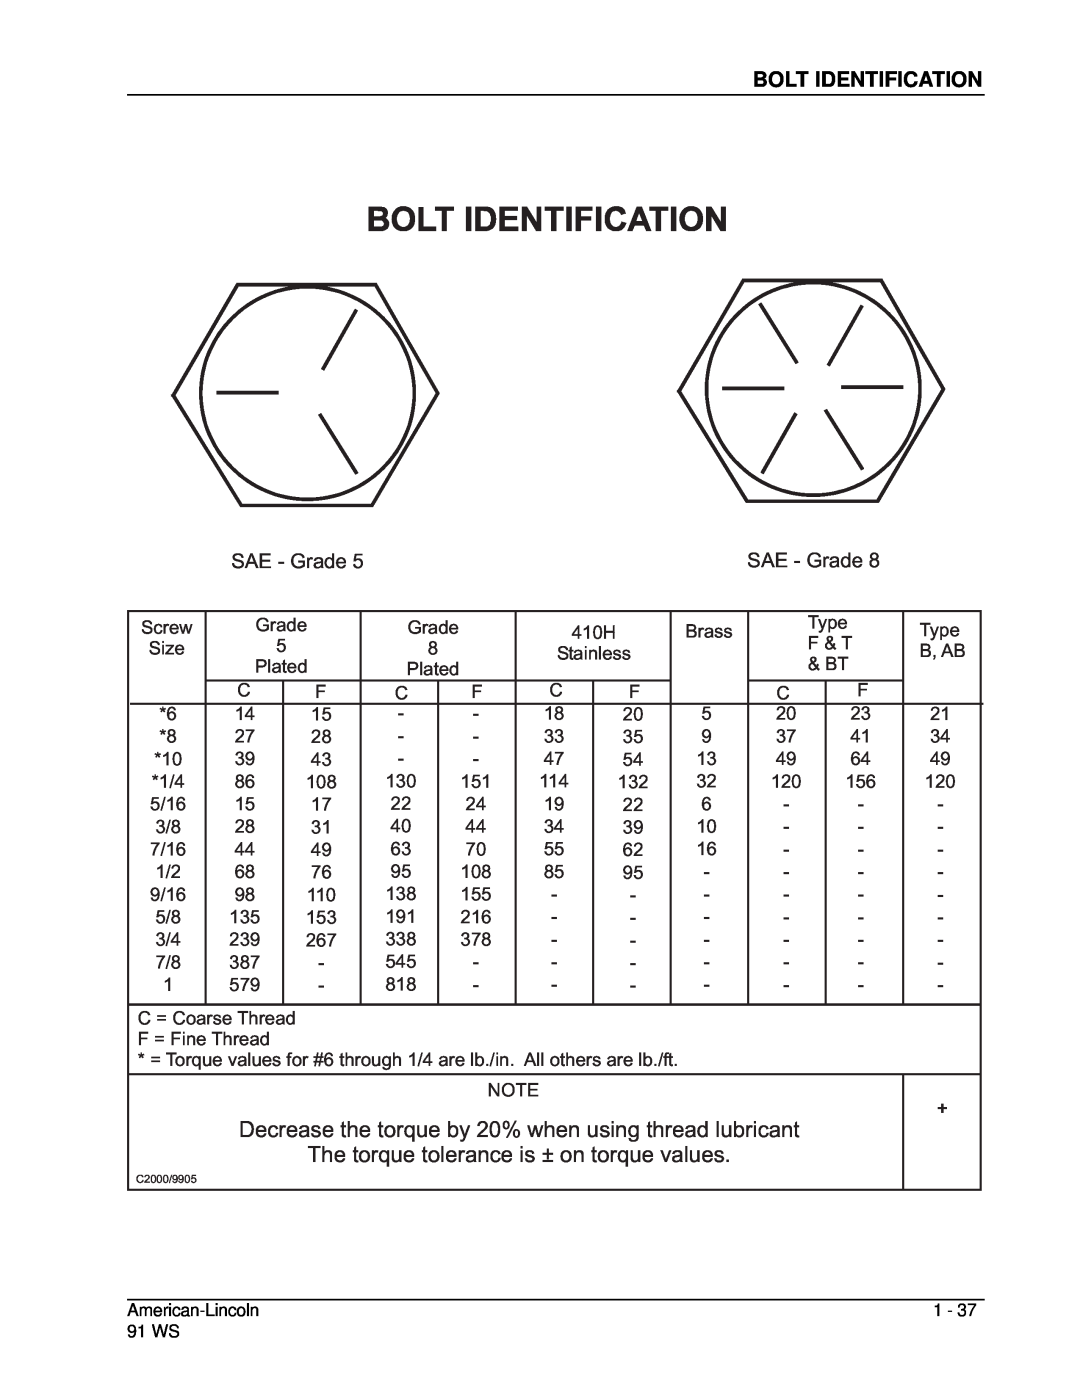 Nilfisk-ALTO 91WS manual The torque tolerance is ± on torque values, Bolt Identification 